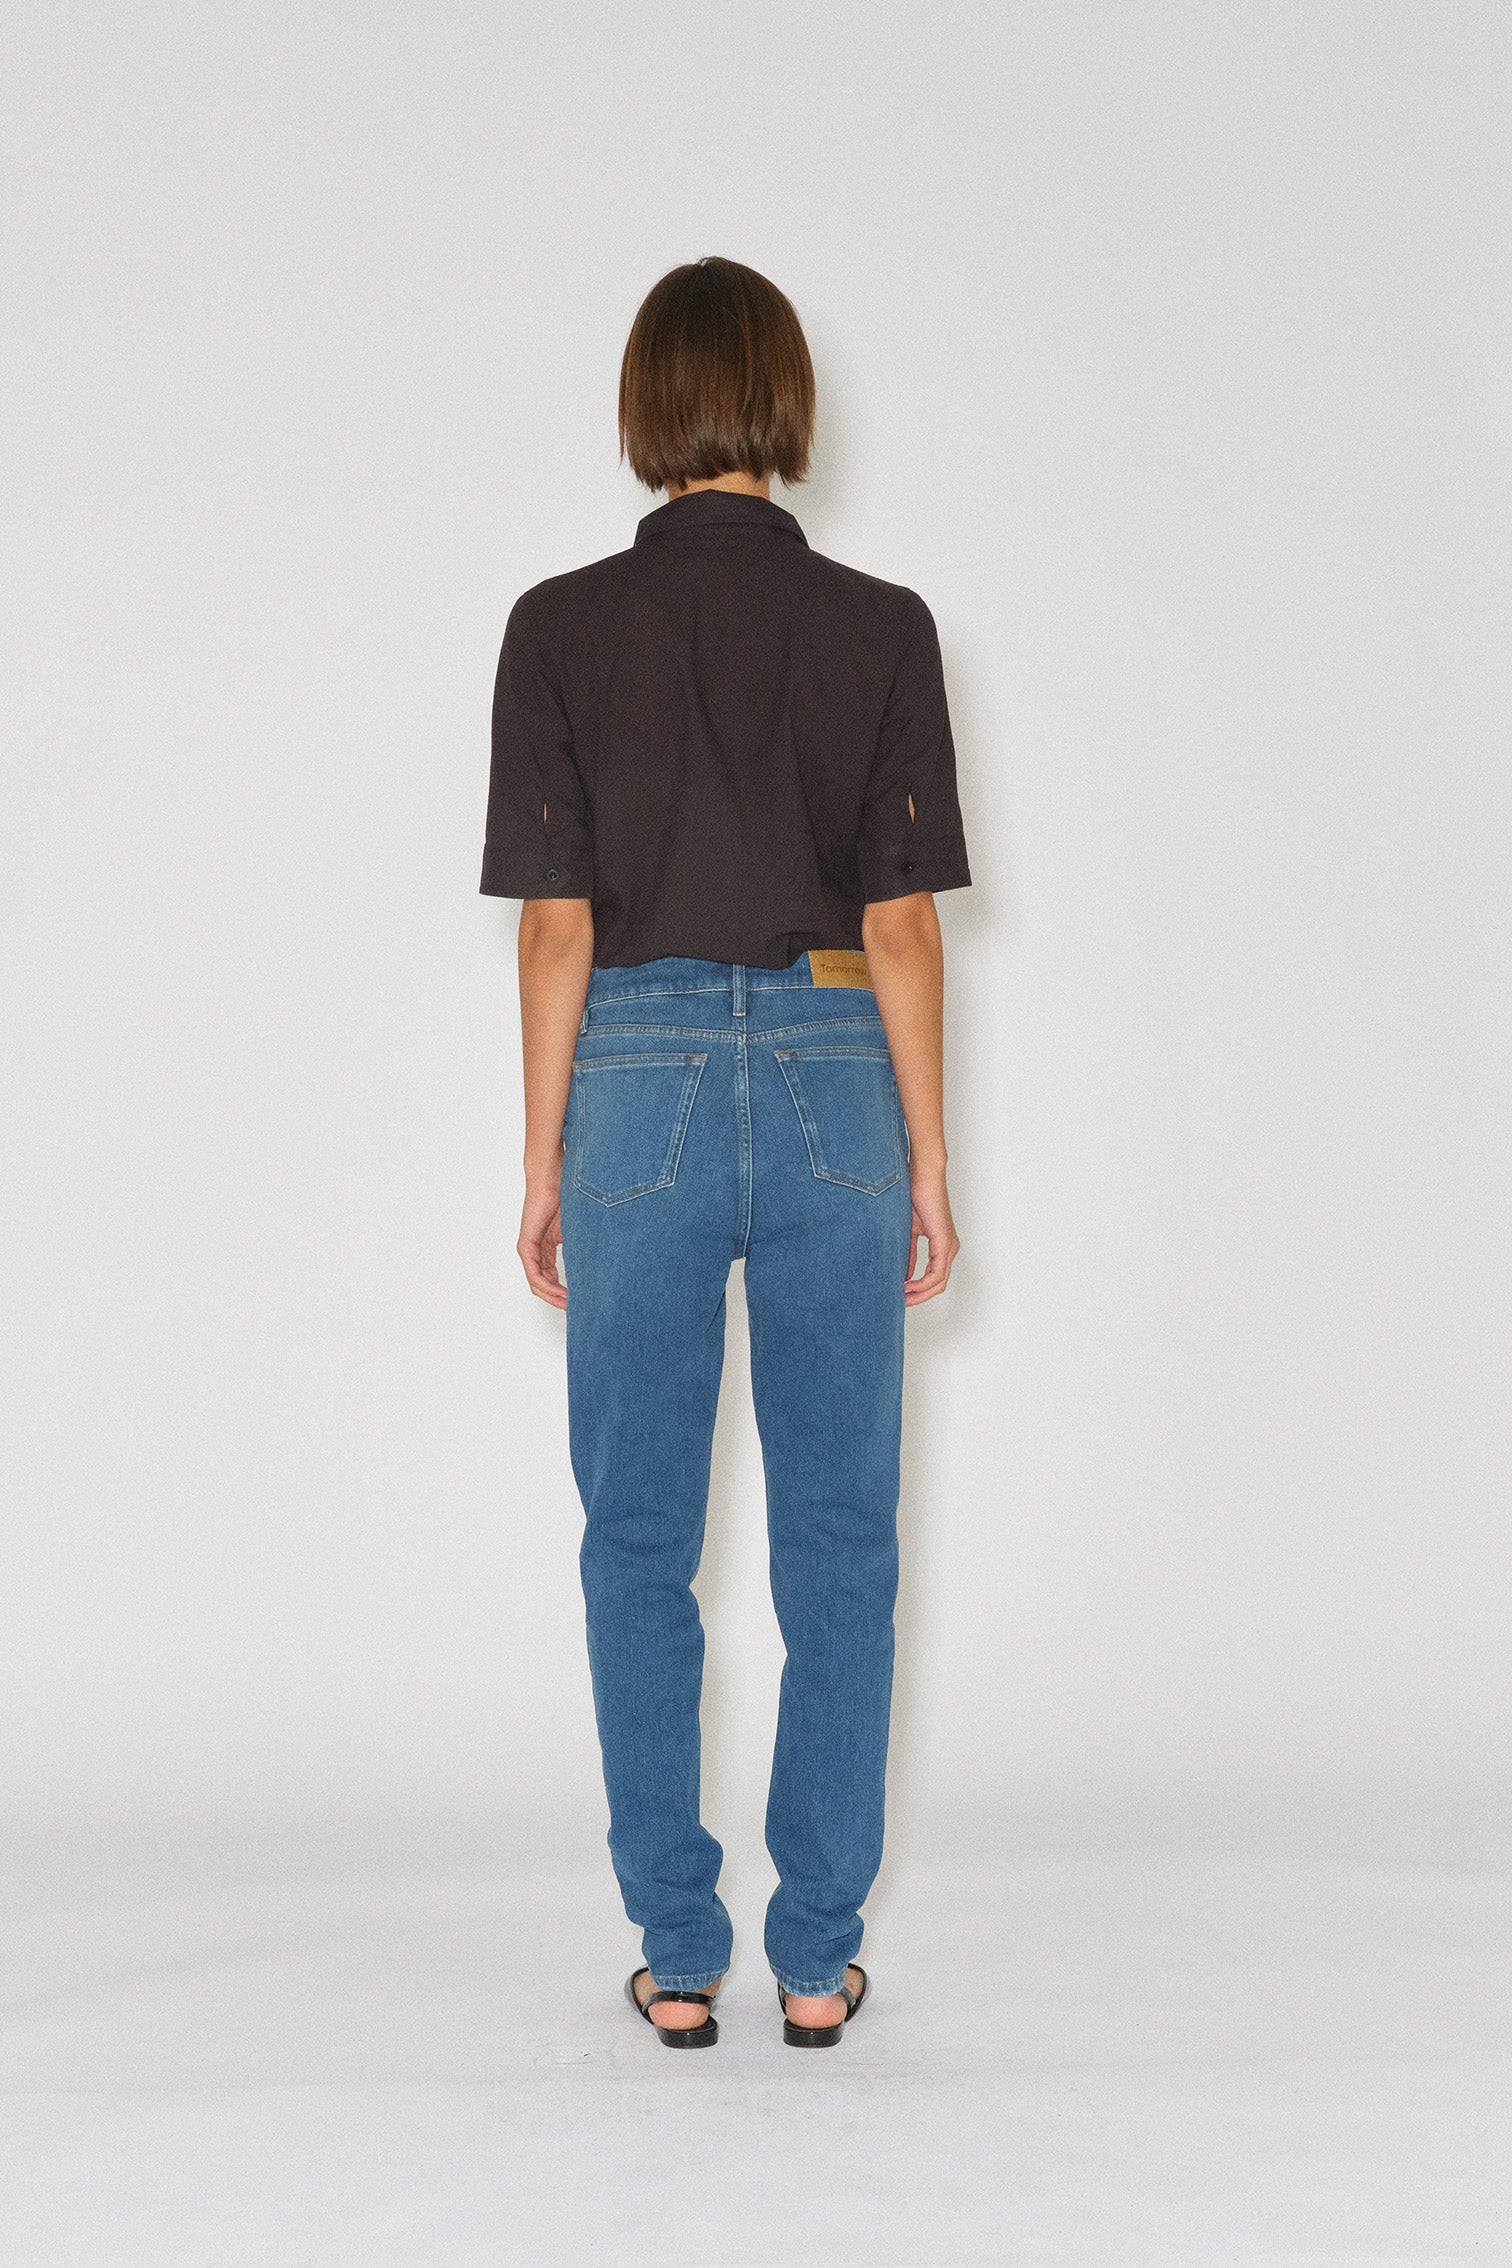 Tomorrow TMRW Hepburn Jeans - Bilbao Jeans & Pants 51 Denim Blue